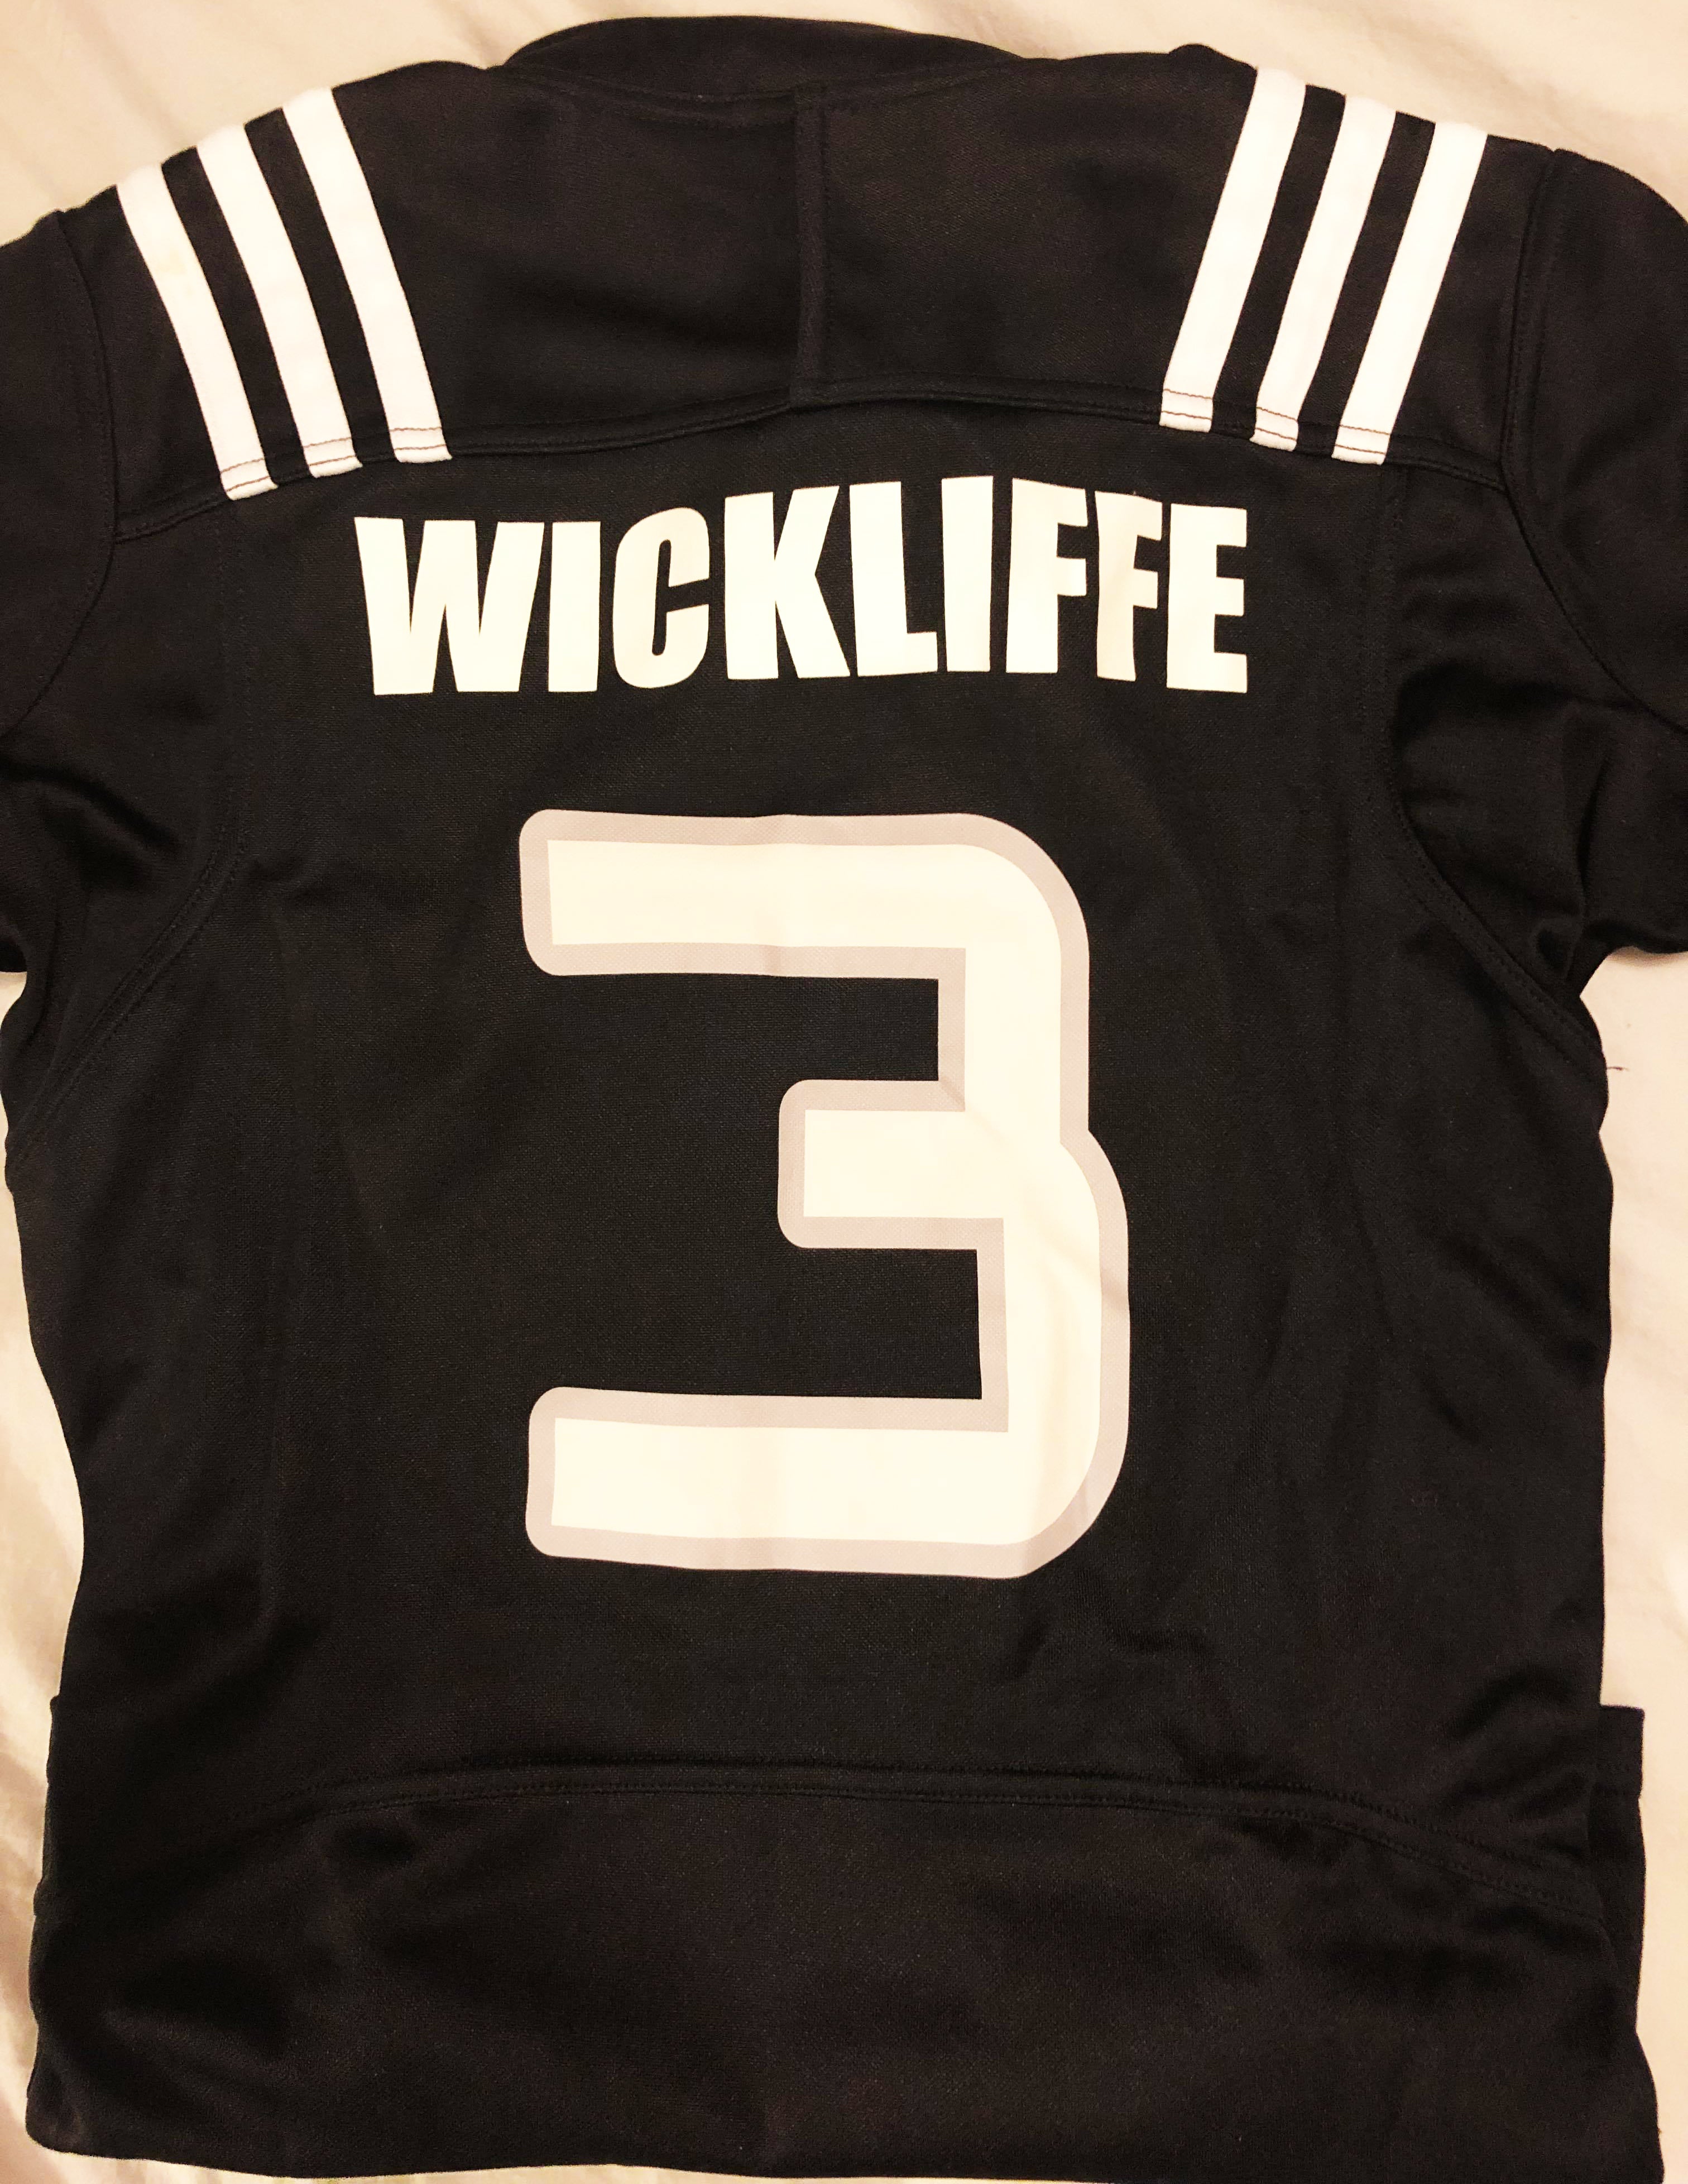 Wickliffe Ultimate Rugby Raffle